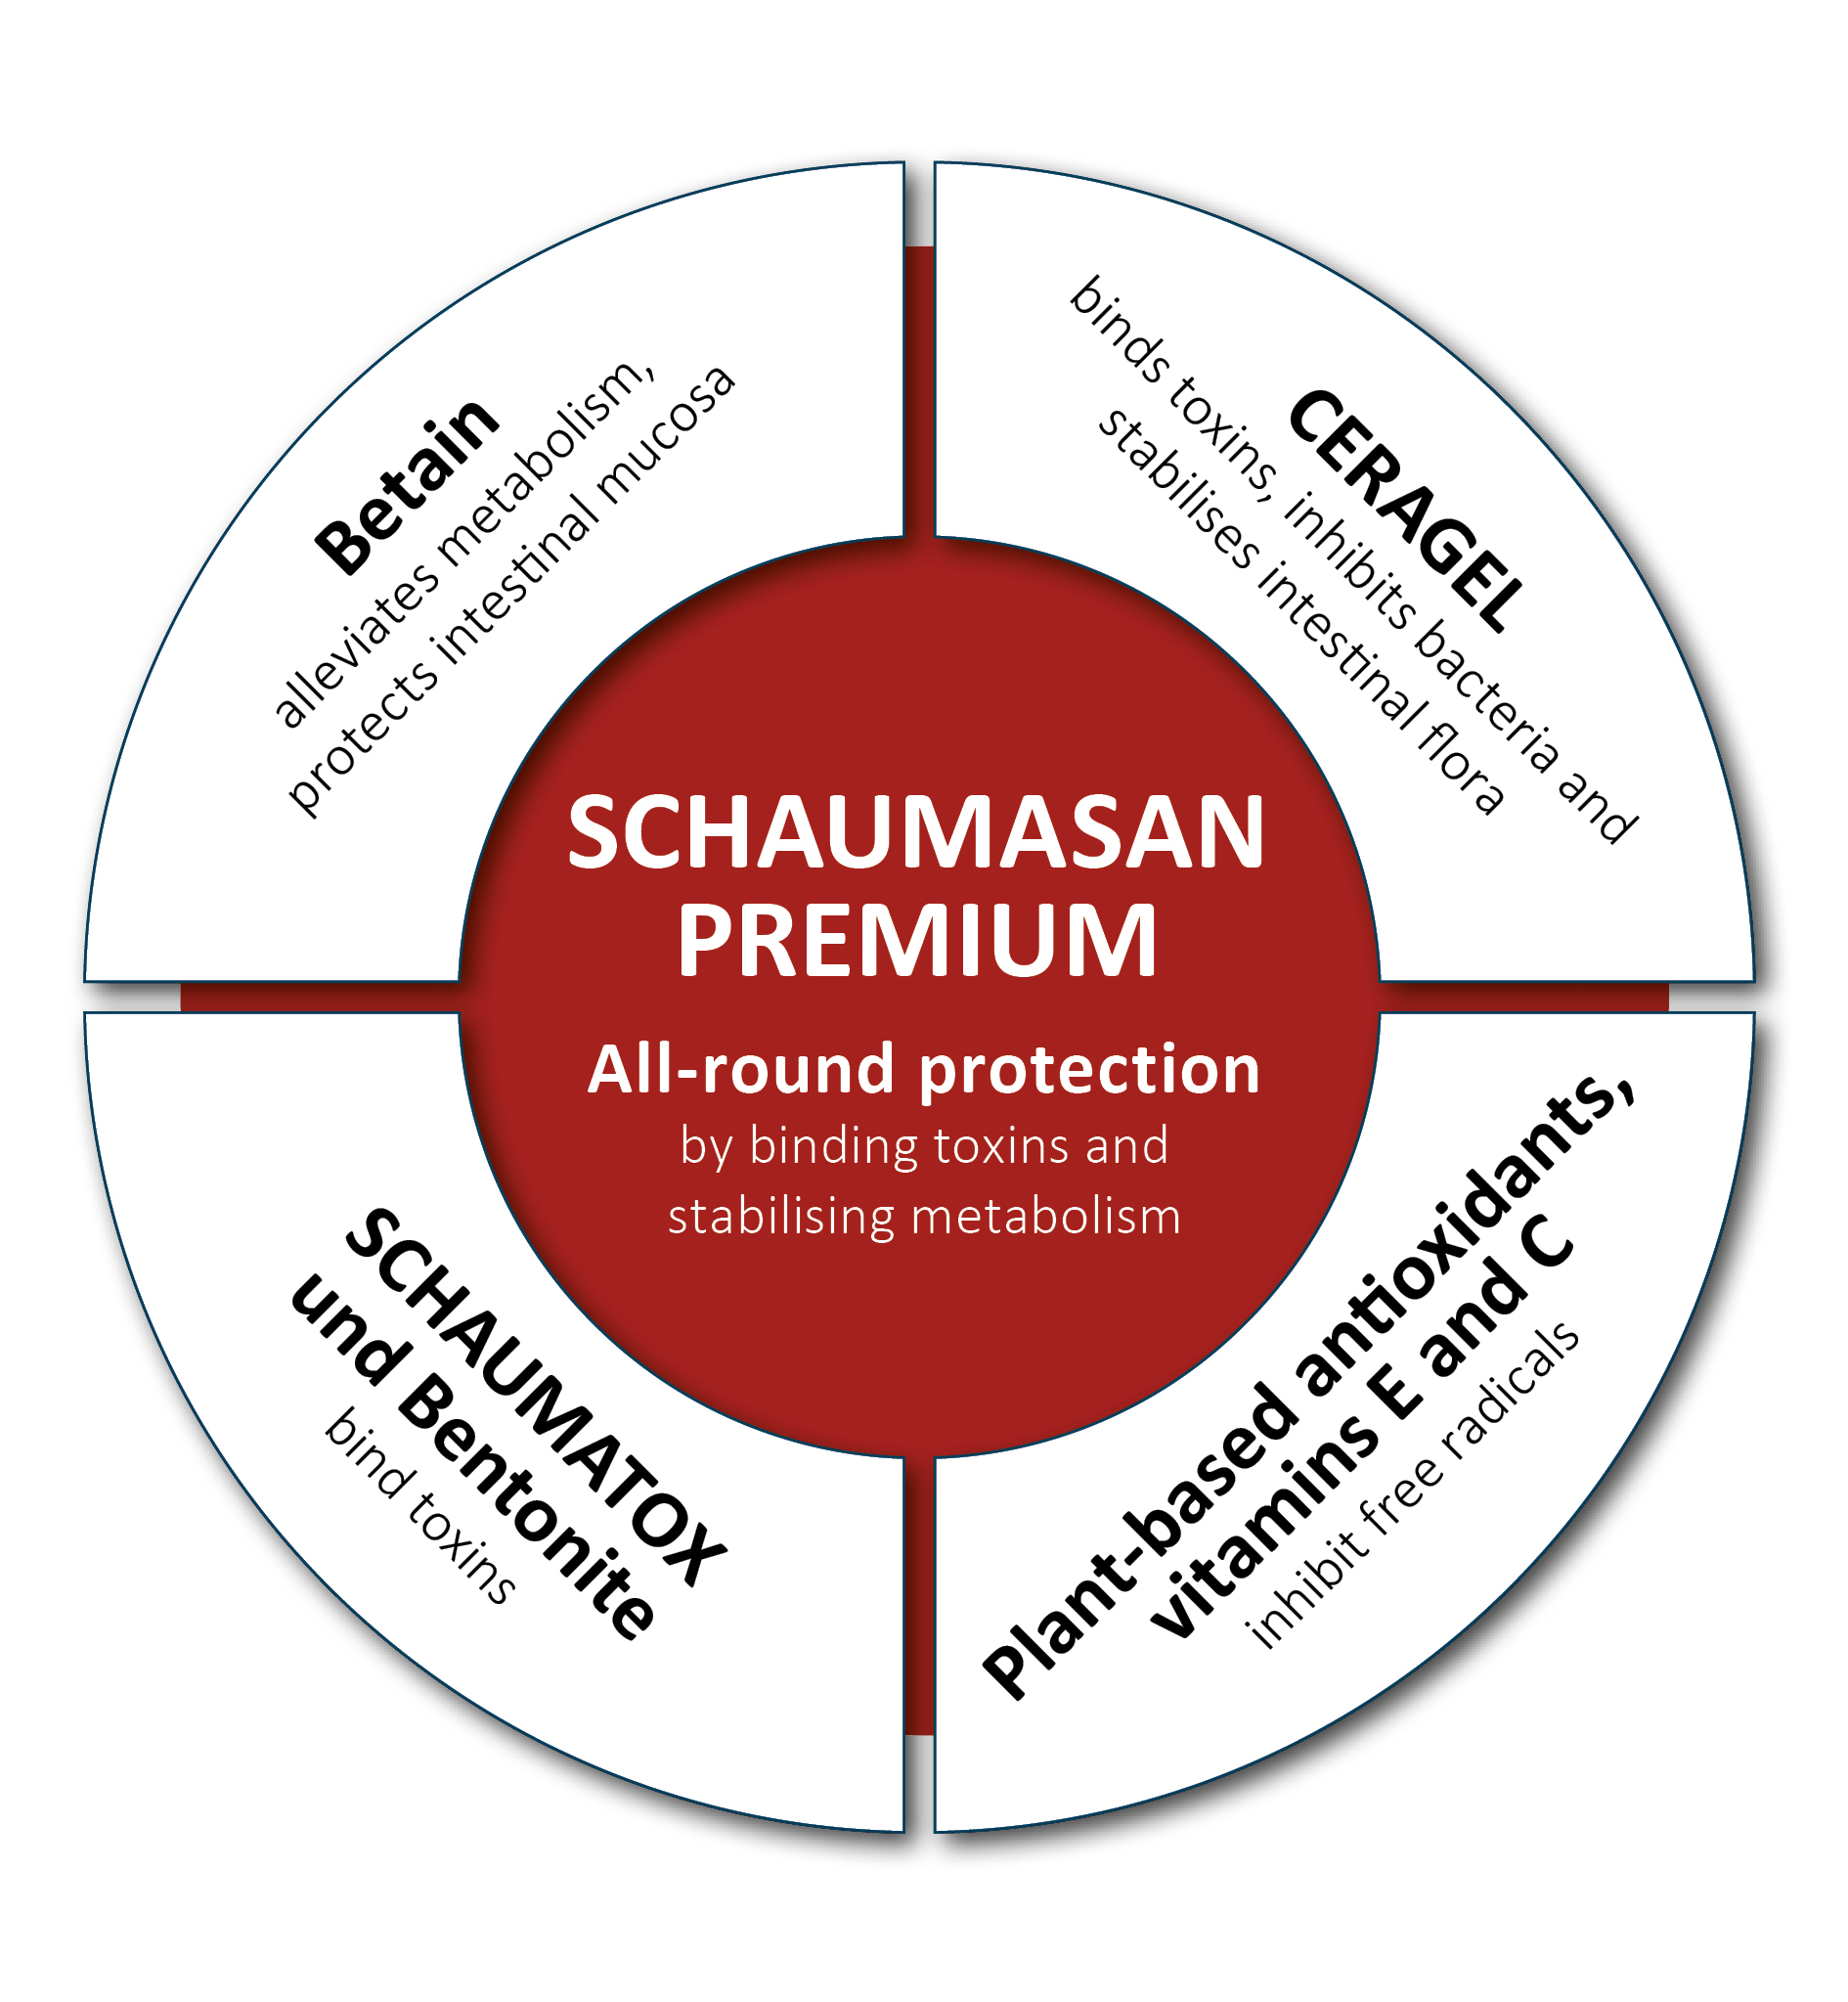 Components of SCHAUMASAN PREMIUM